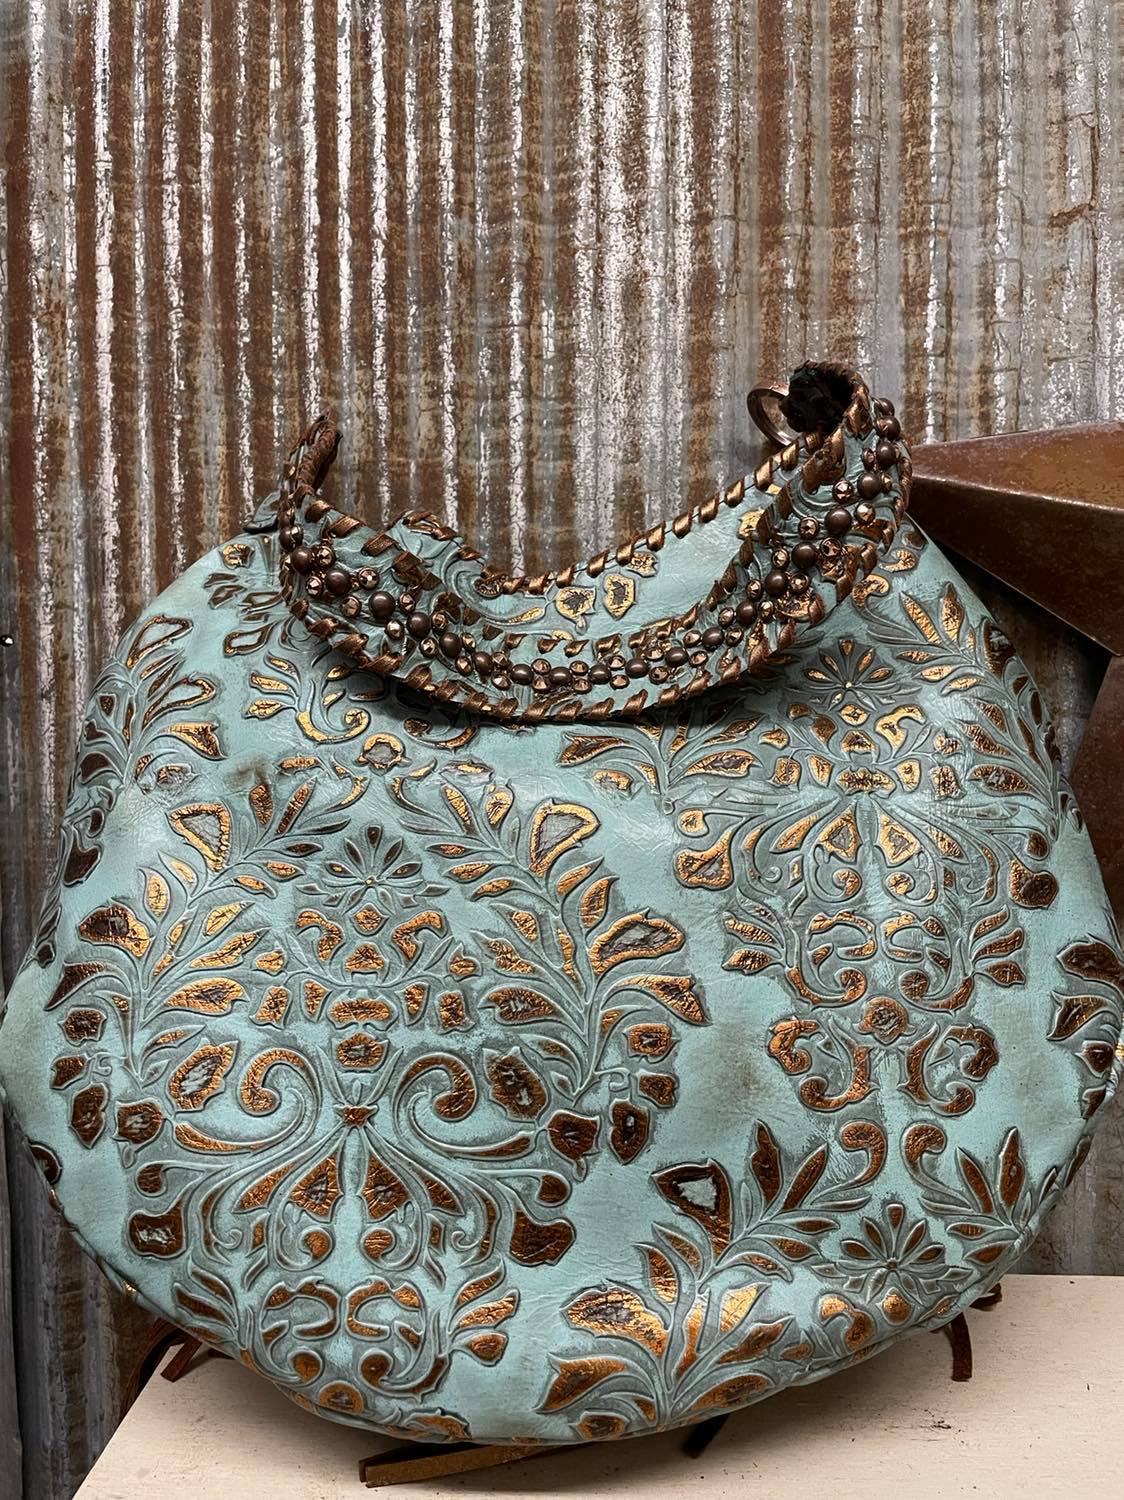 Kurtmen Turquoise Cheetah Cookie Hand Bag